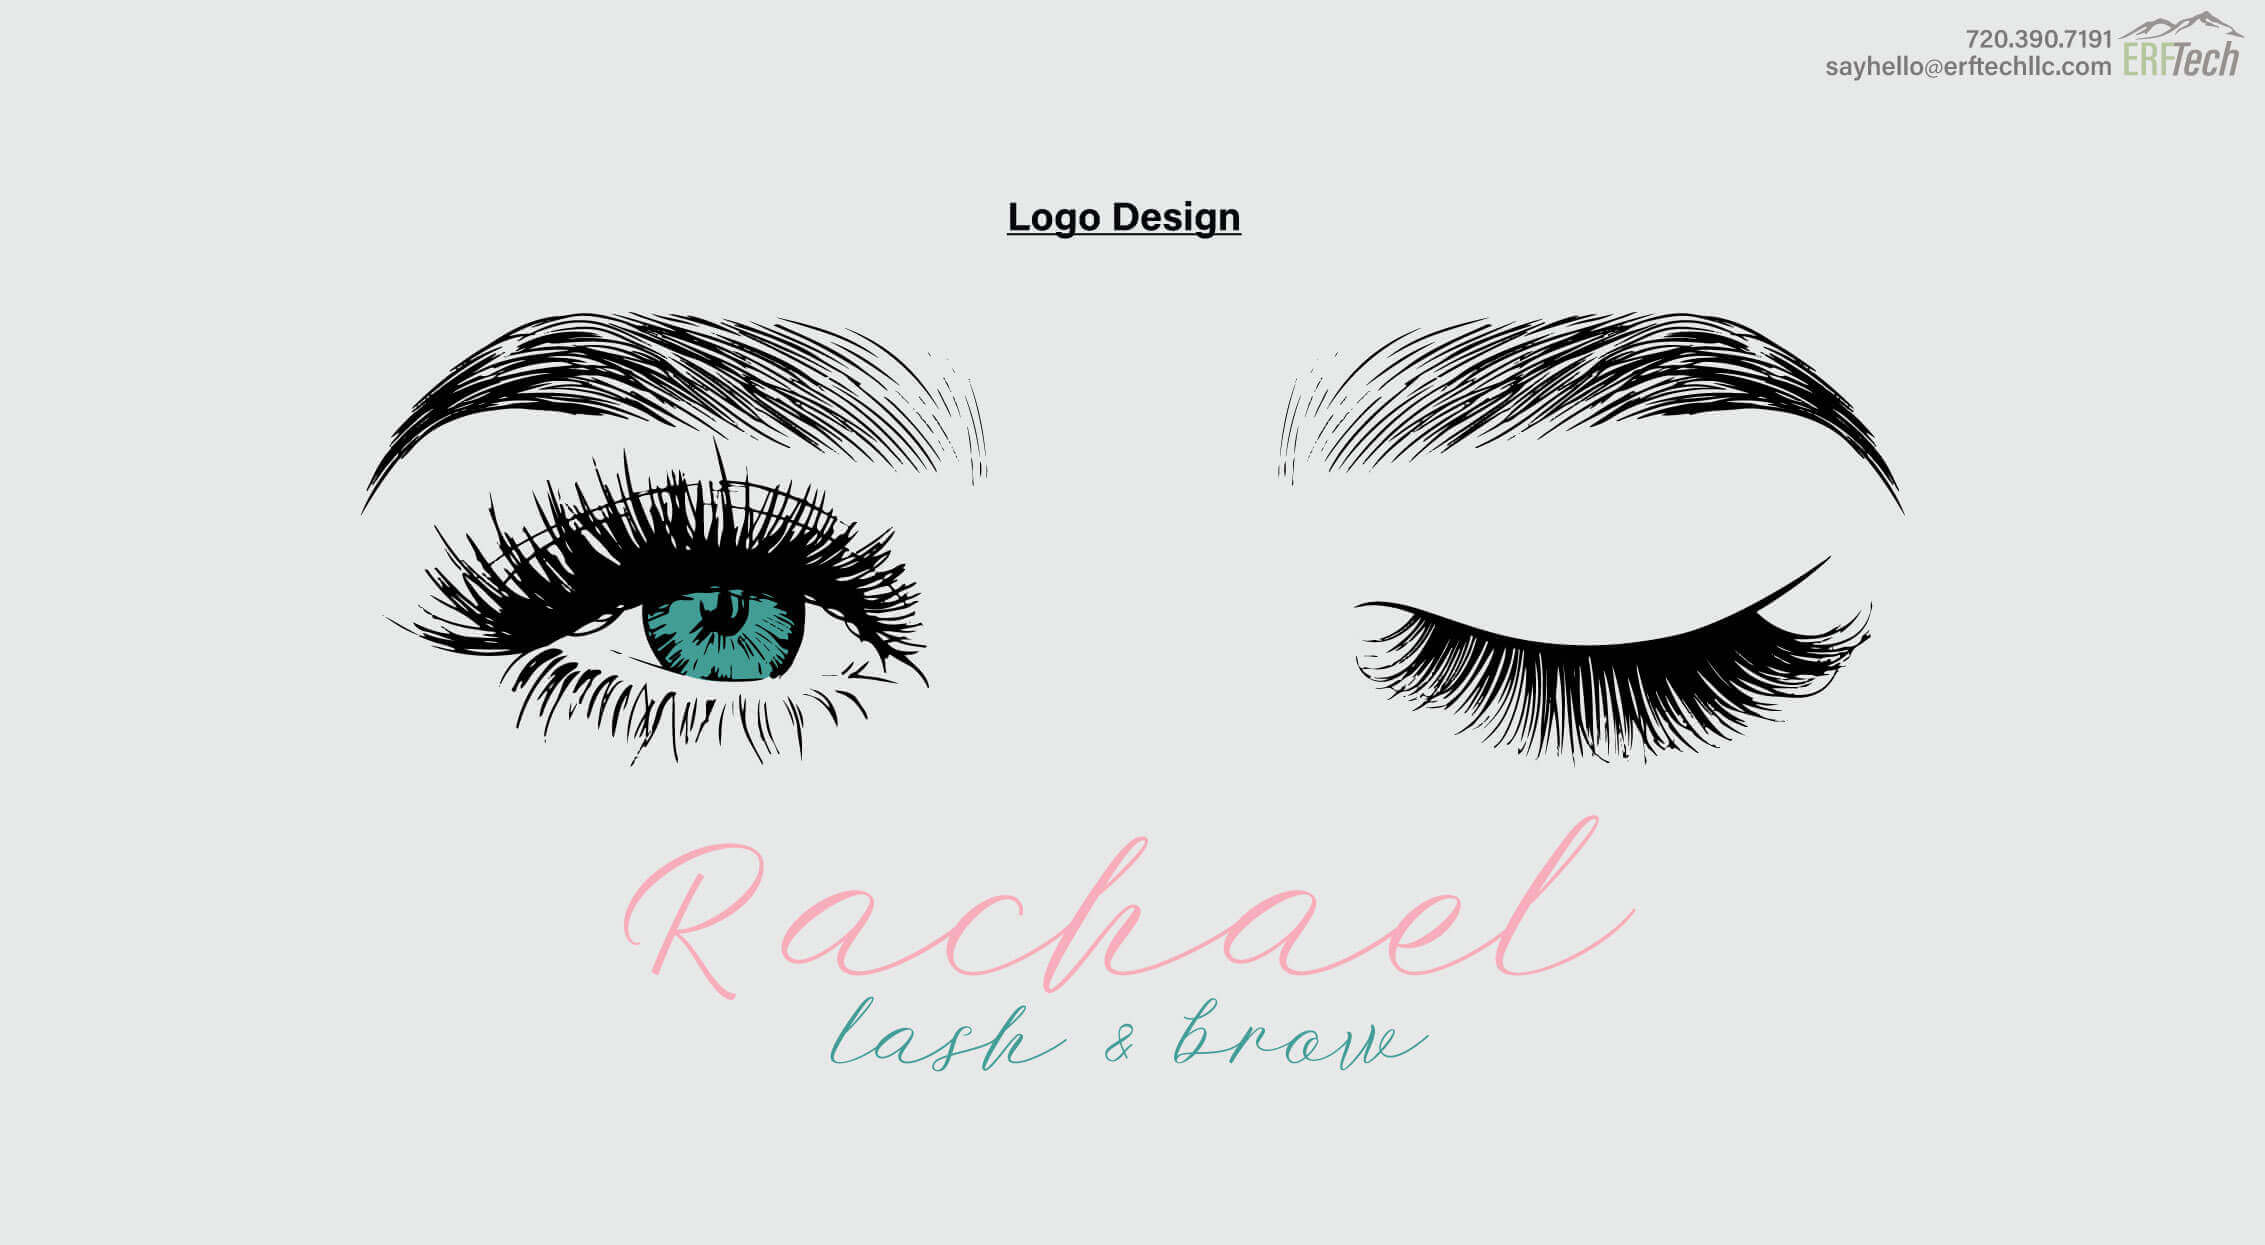 Logo Design for Rachael Lash& Brow in Denver, CO